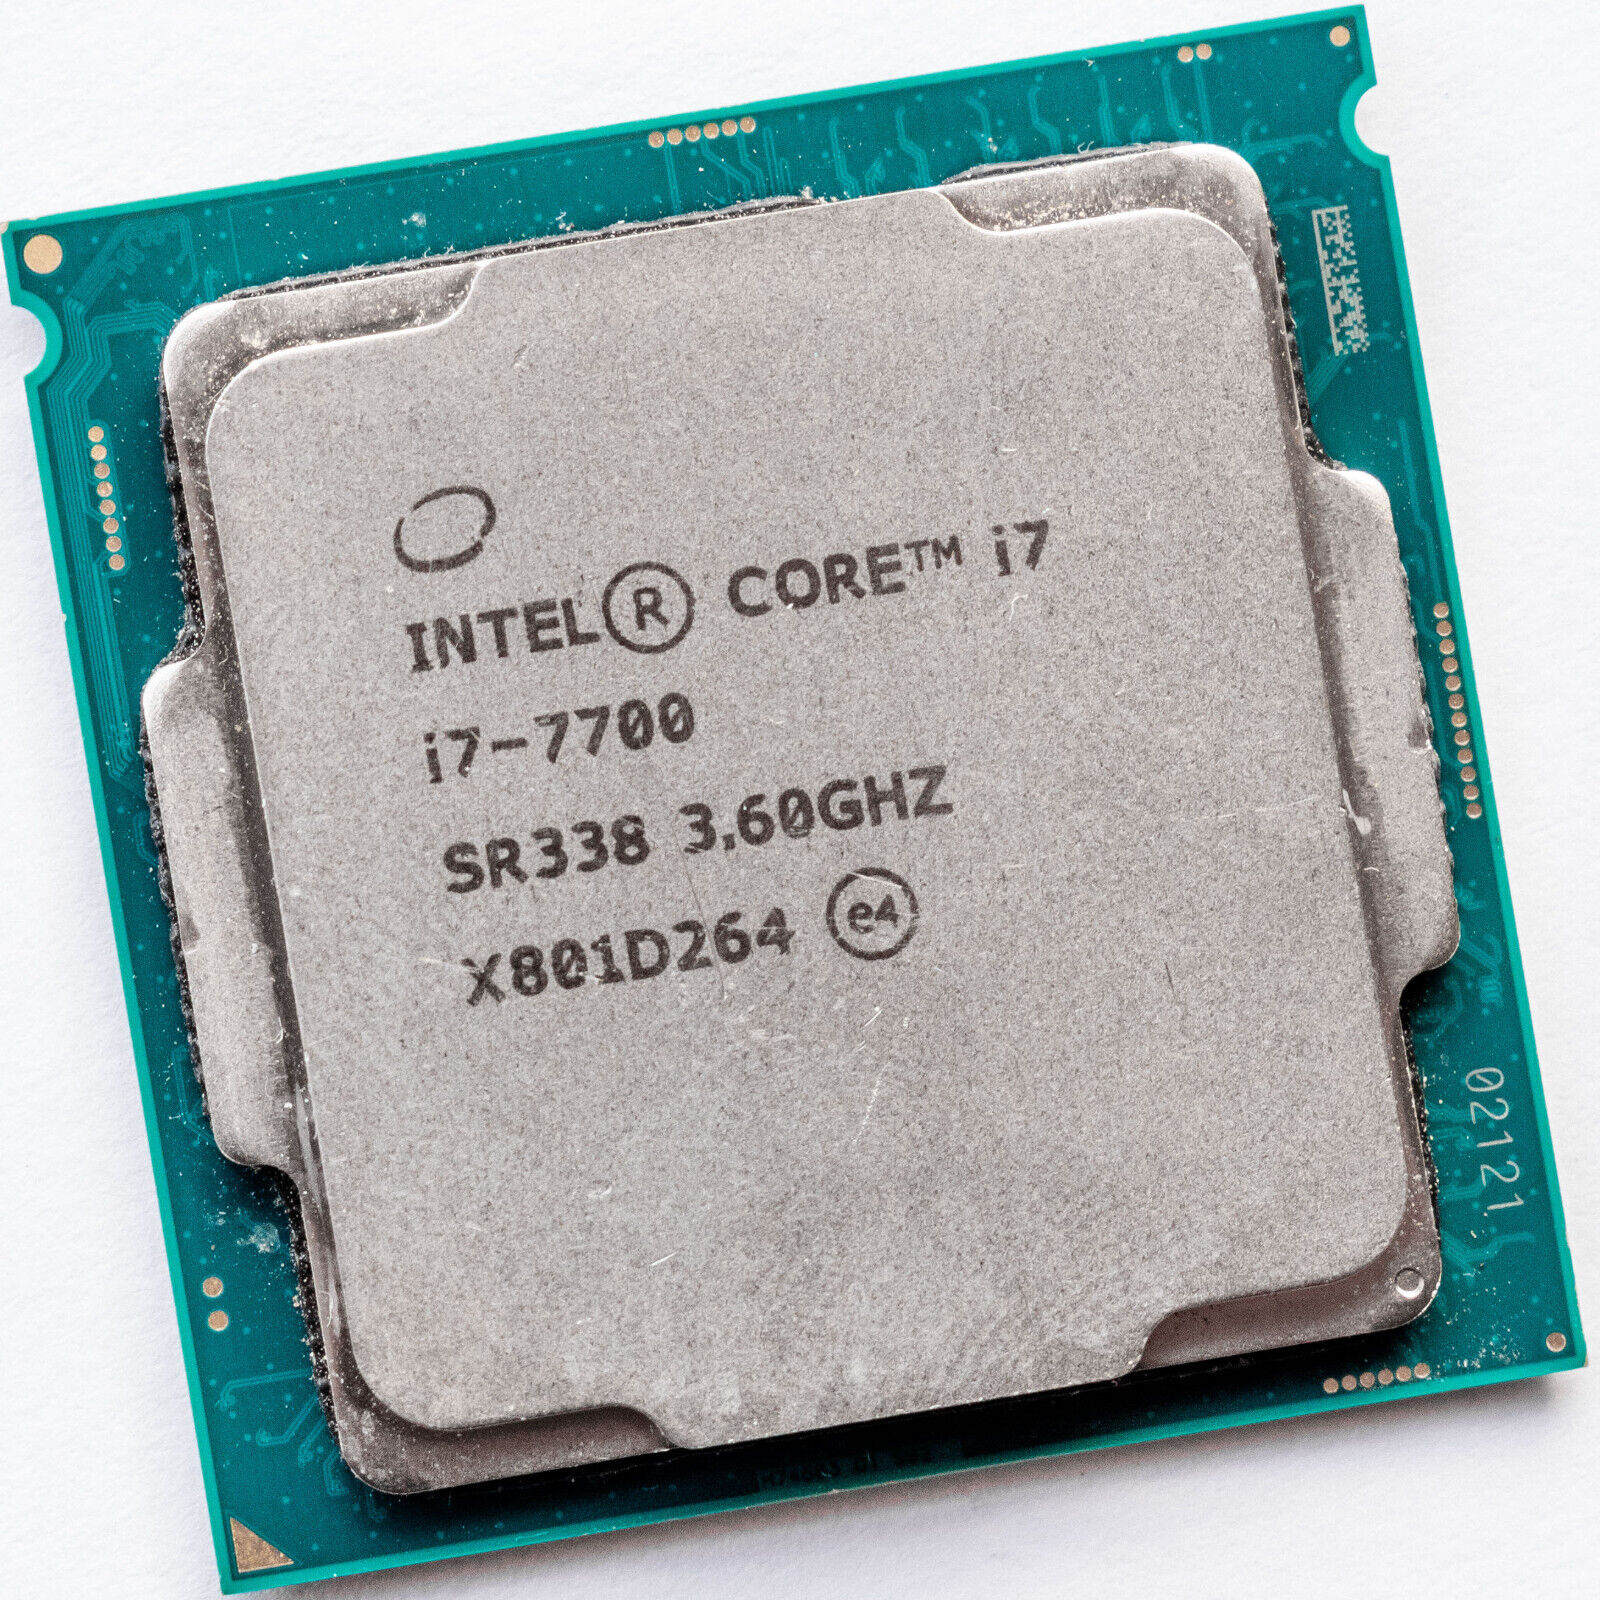 Intel Core i7-7700 SR338 3.6GHz Quad Core 7th Gen Kaby Lake LGA1151 Processor